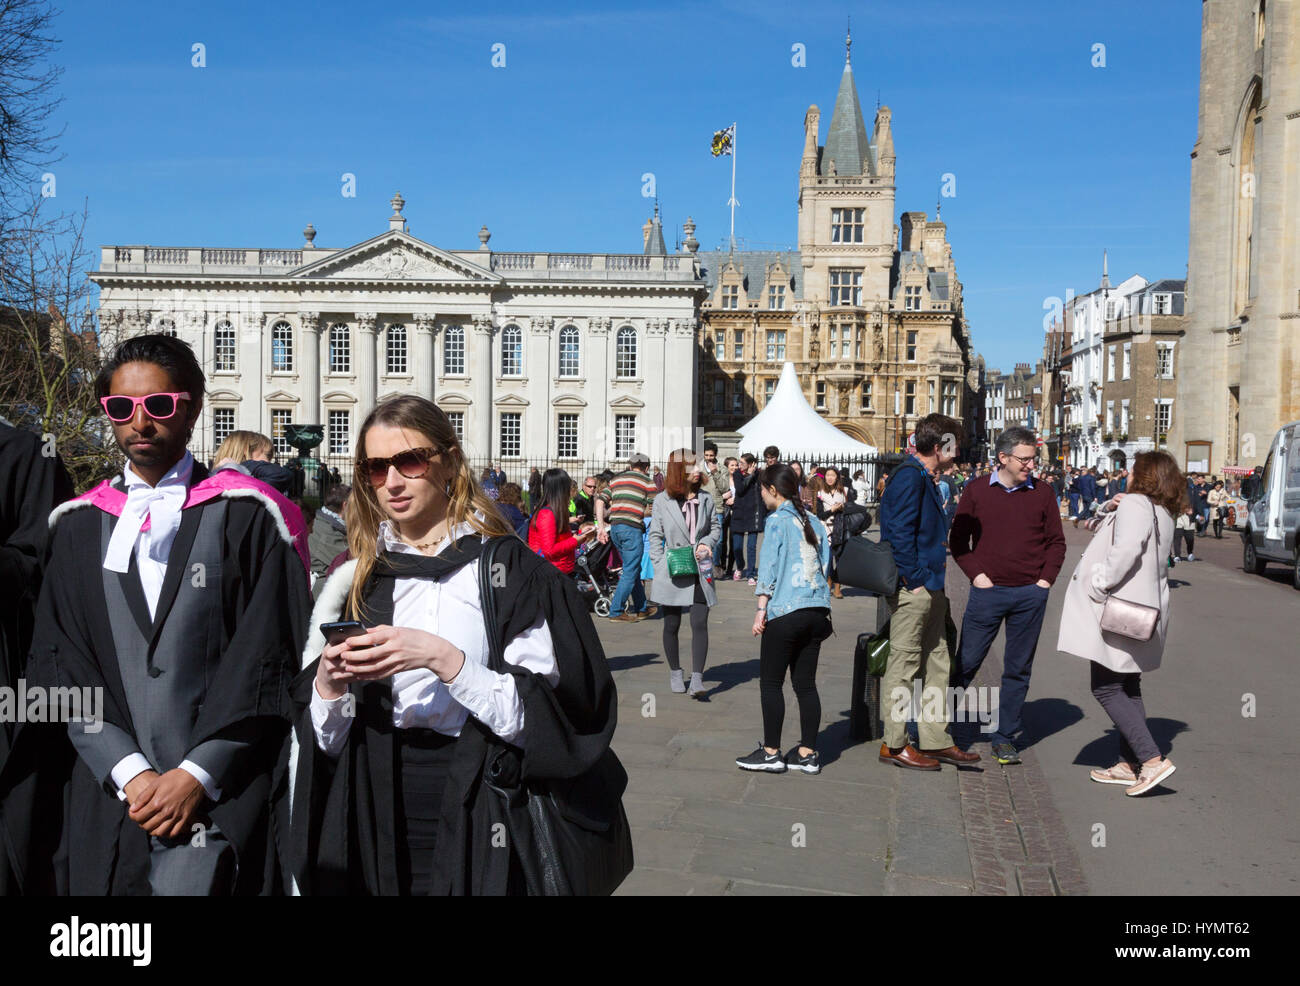 Cambridge University students wearing gowns on graduation day walking in Kings Parade, Cambridge city centre, Cambridge UK Stock Photo